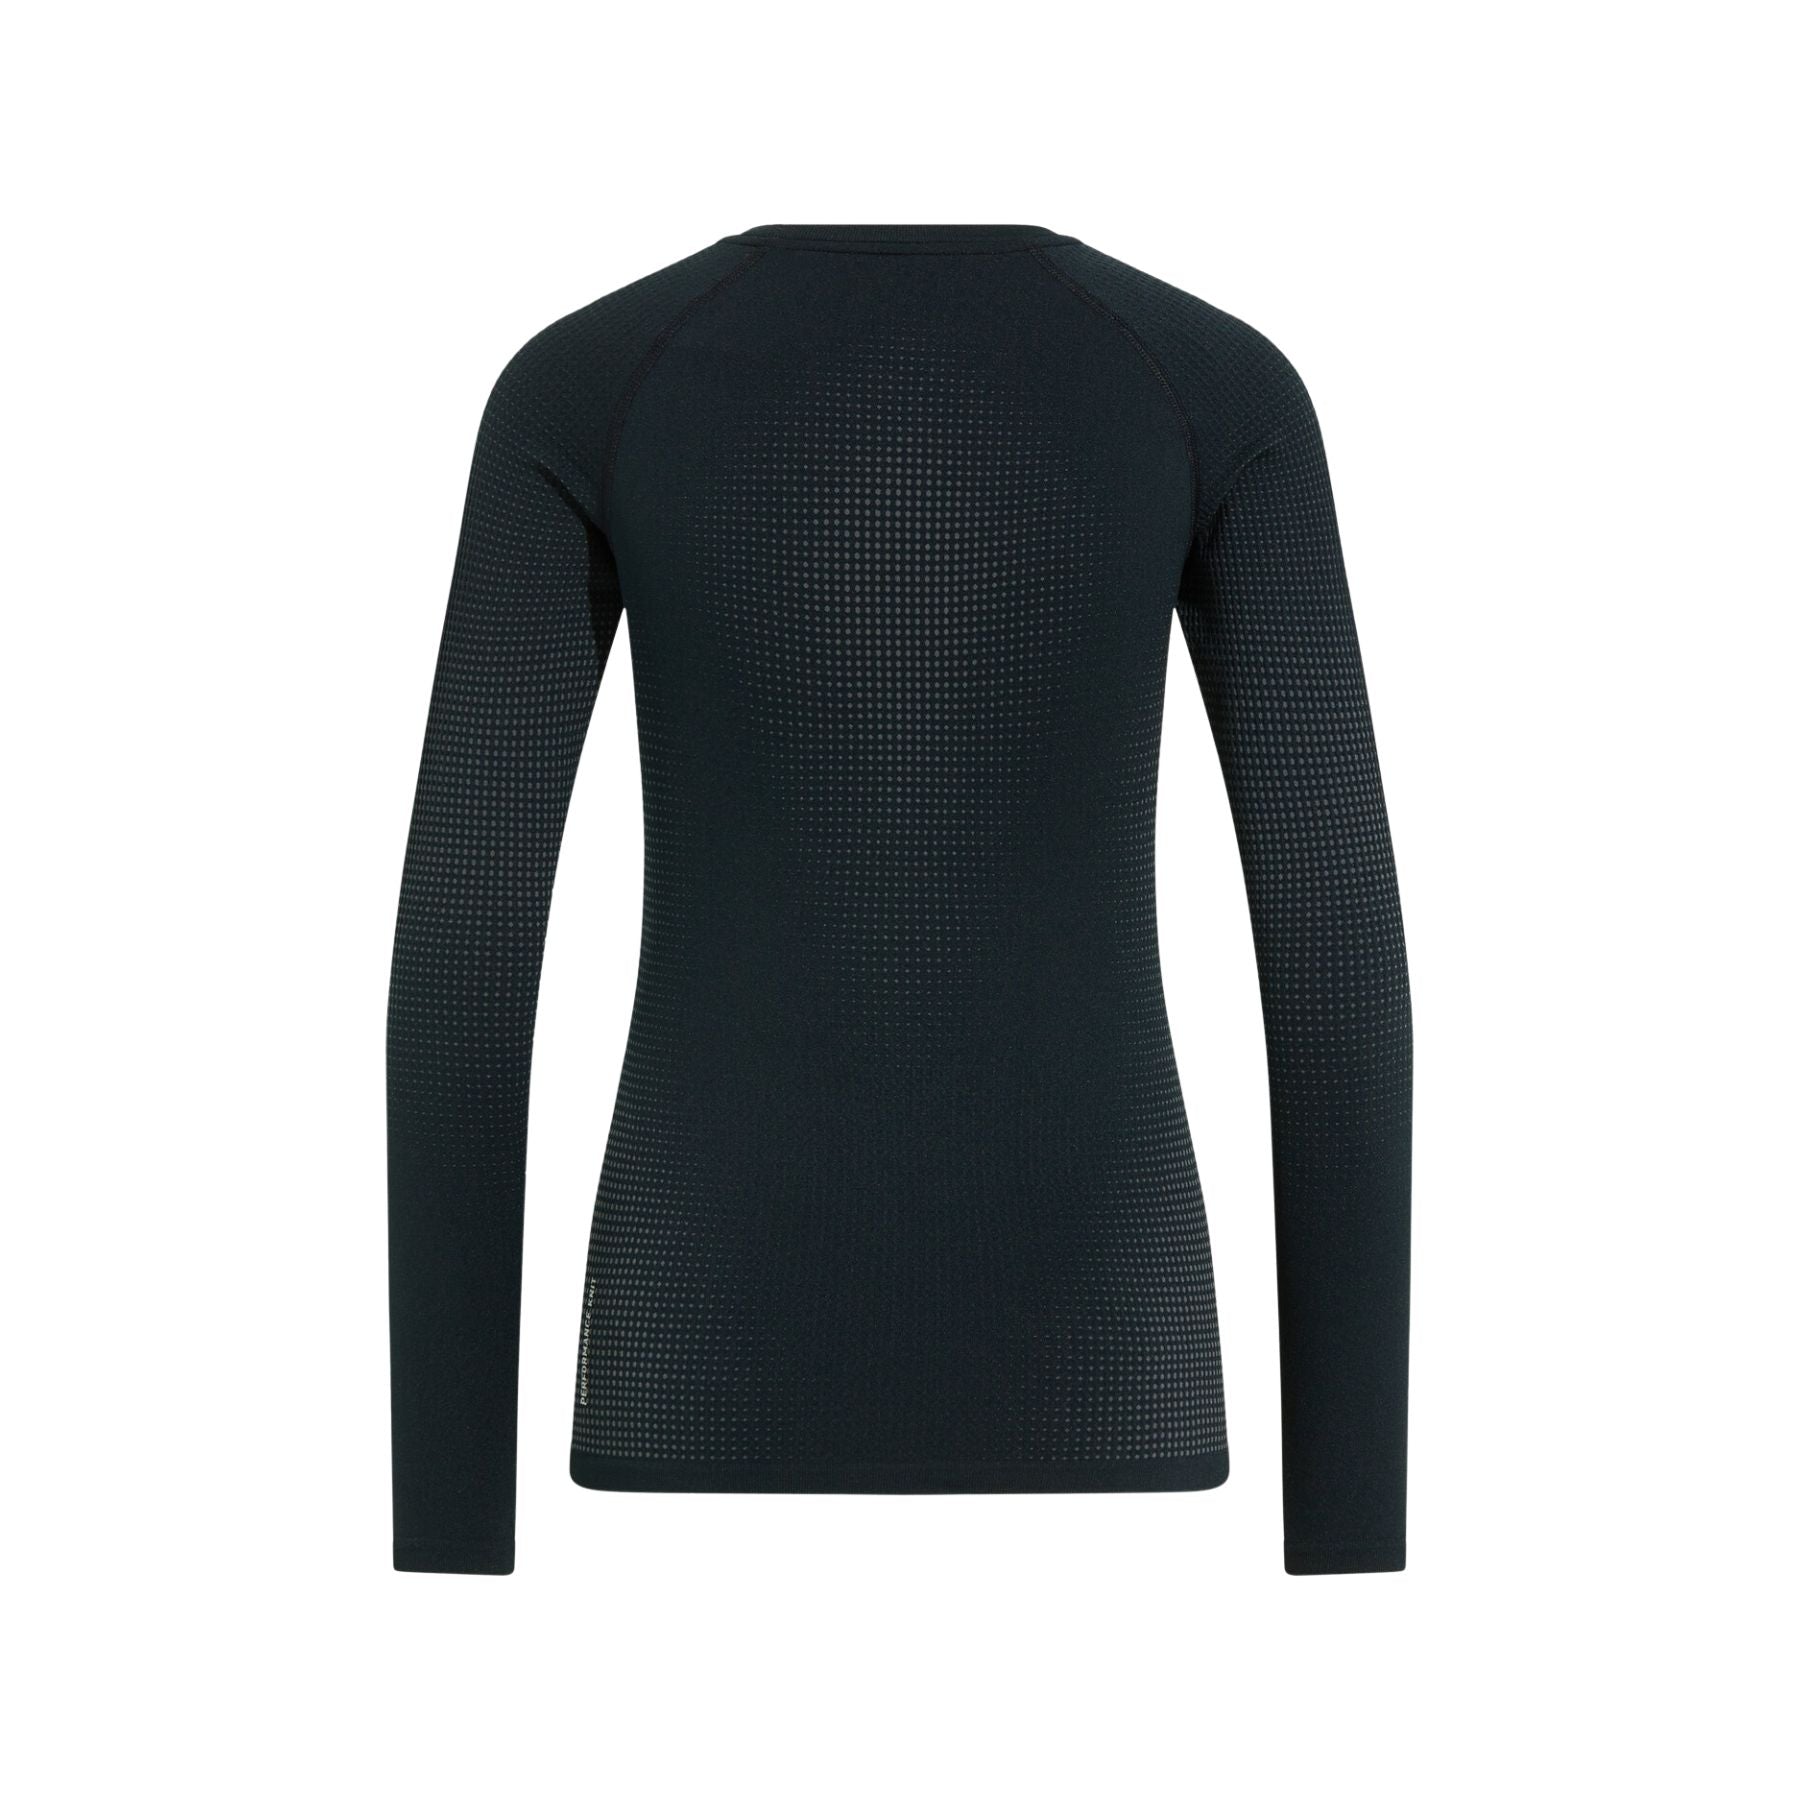 Odlo Women's Performance Warm Base Layer Top in Black/Graphite Grey